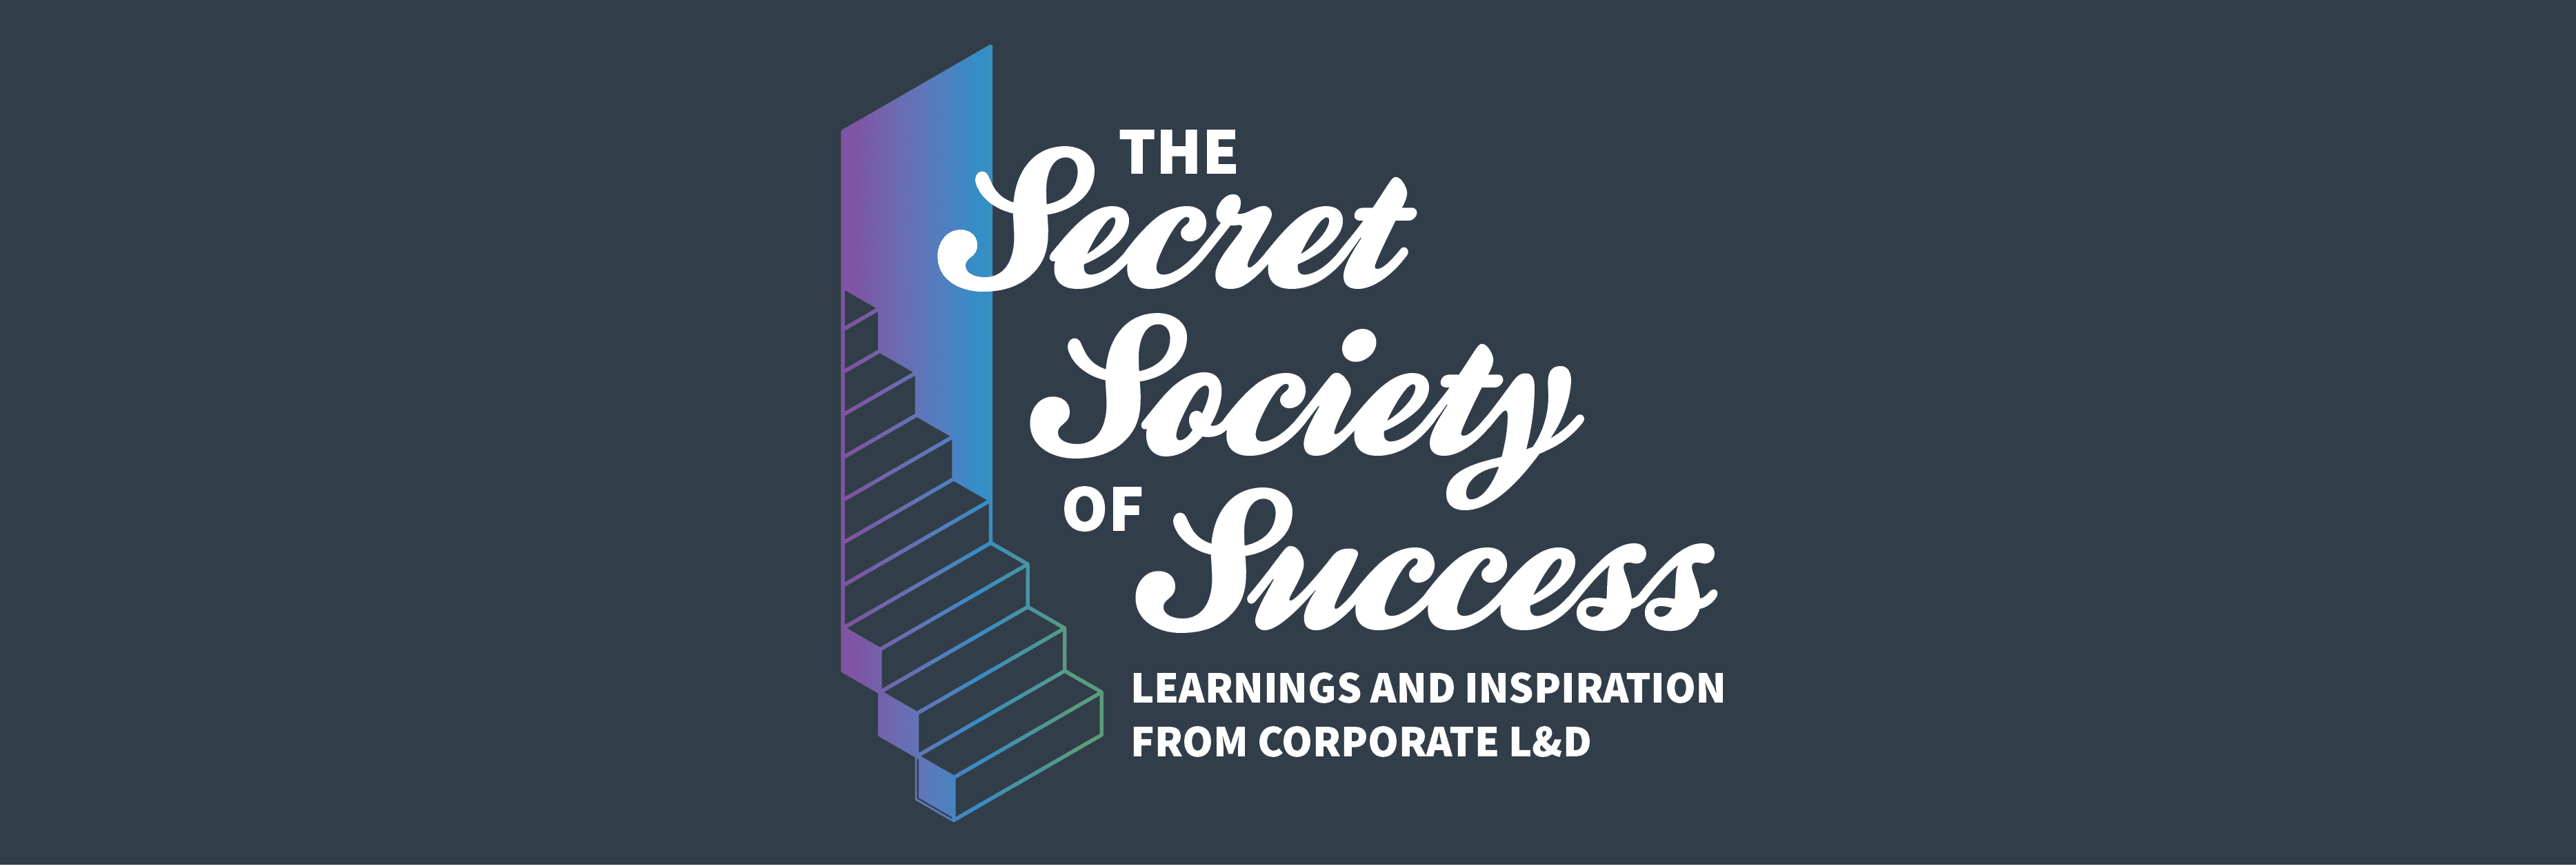 Secret Society of Success Training Podcast